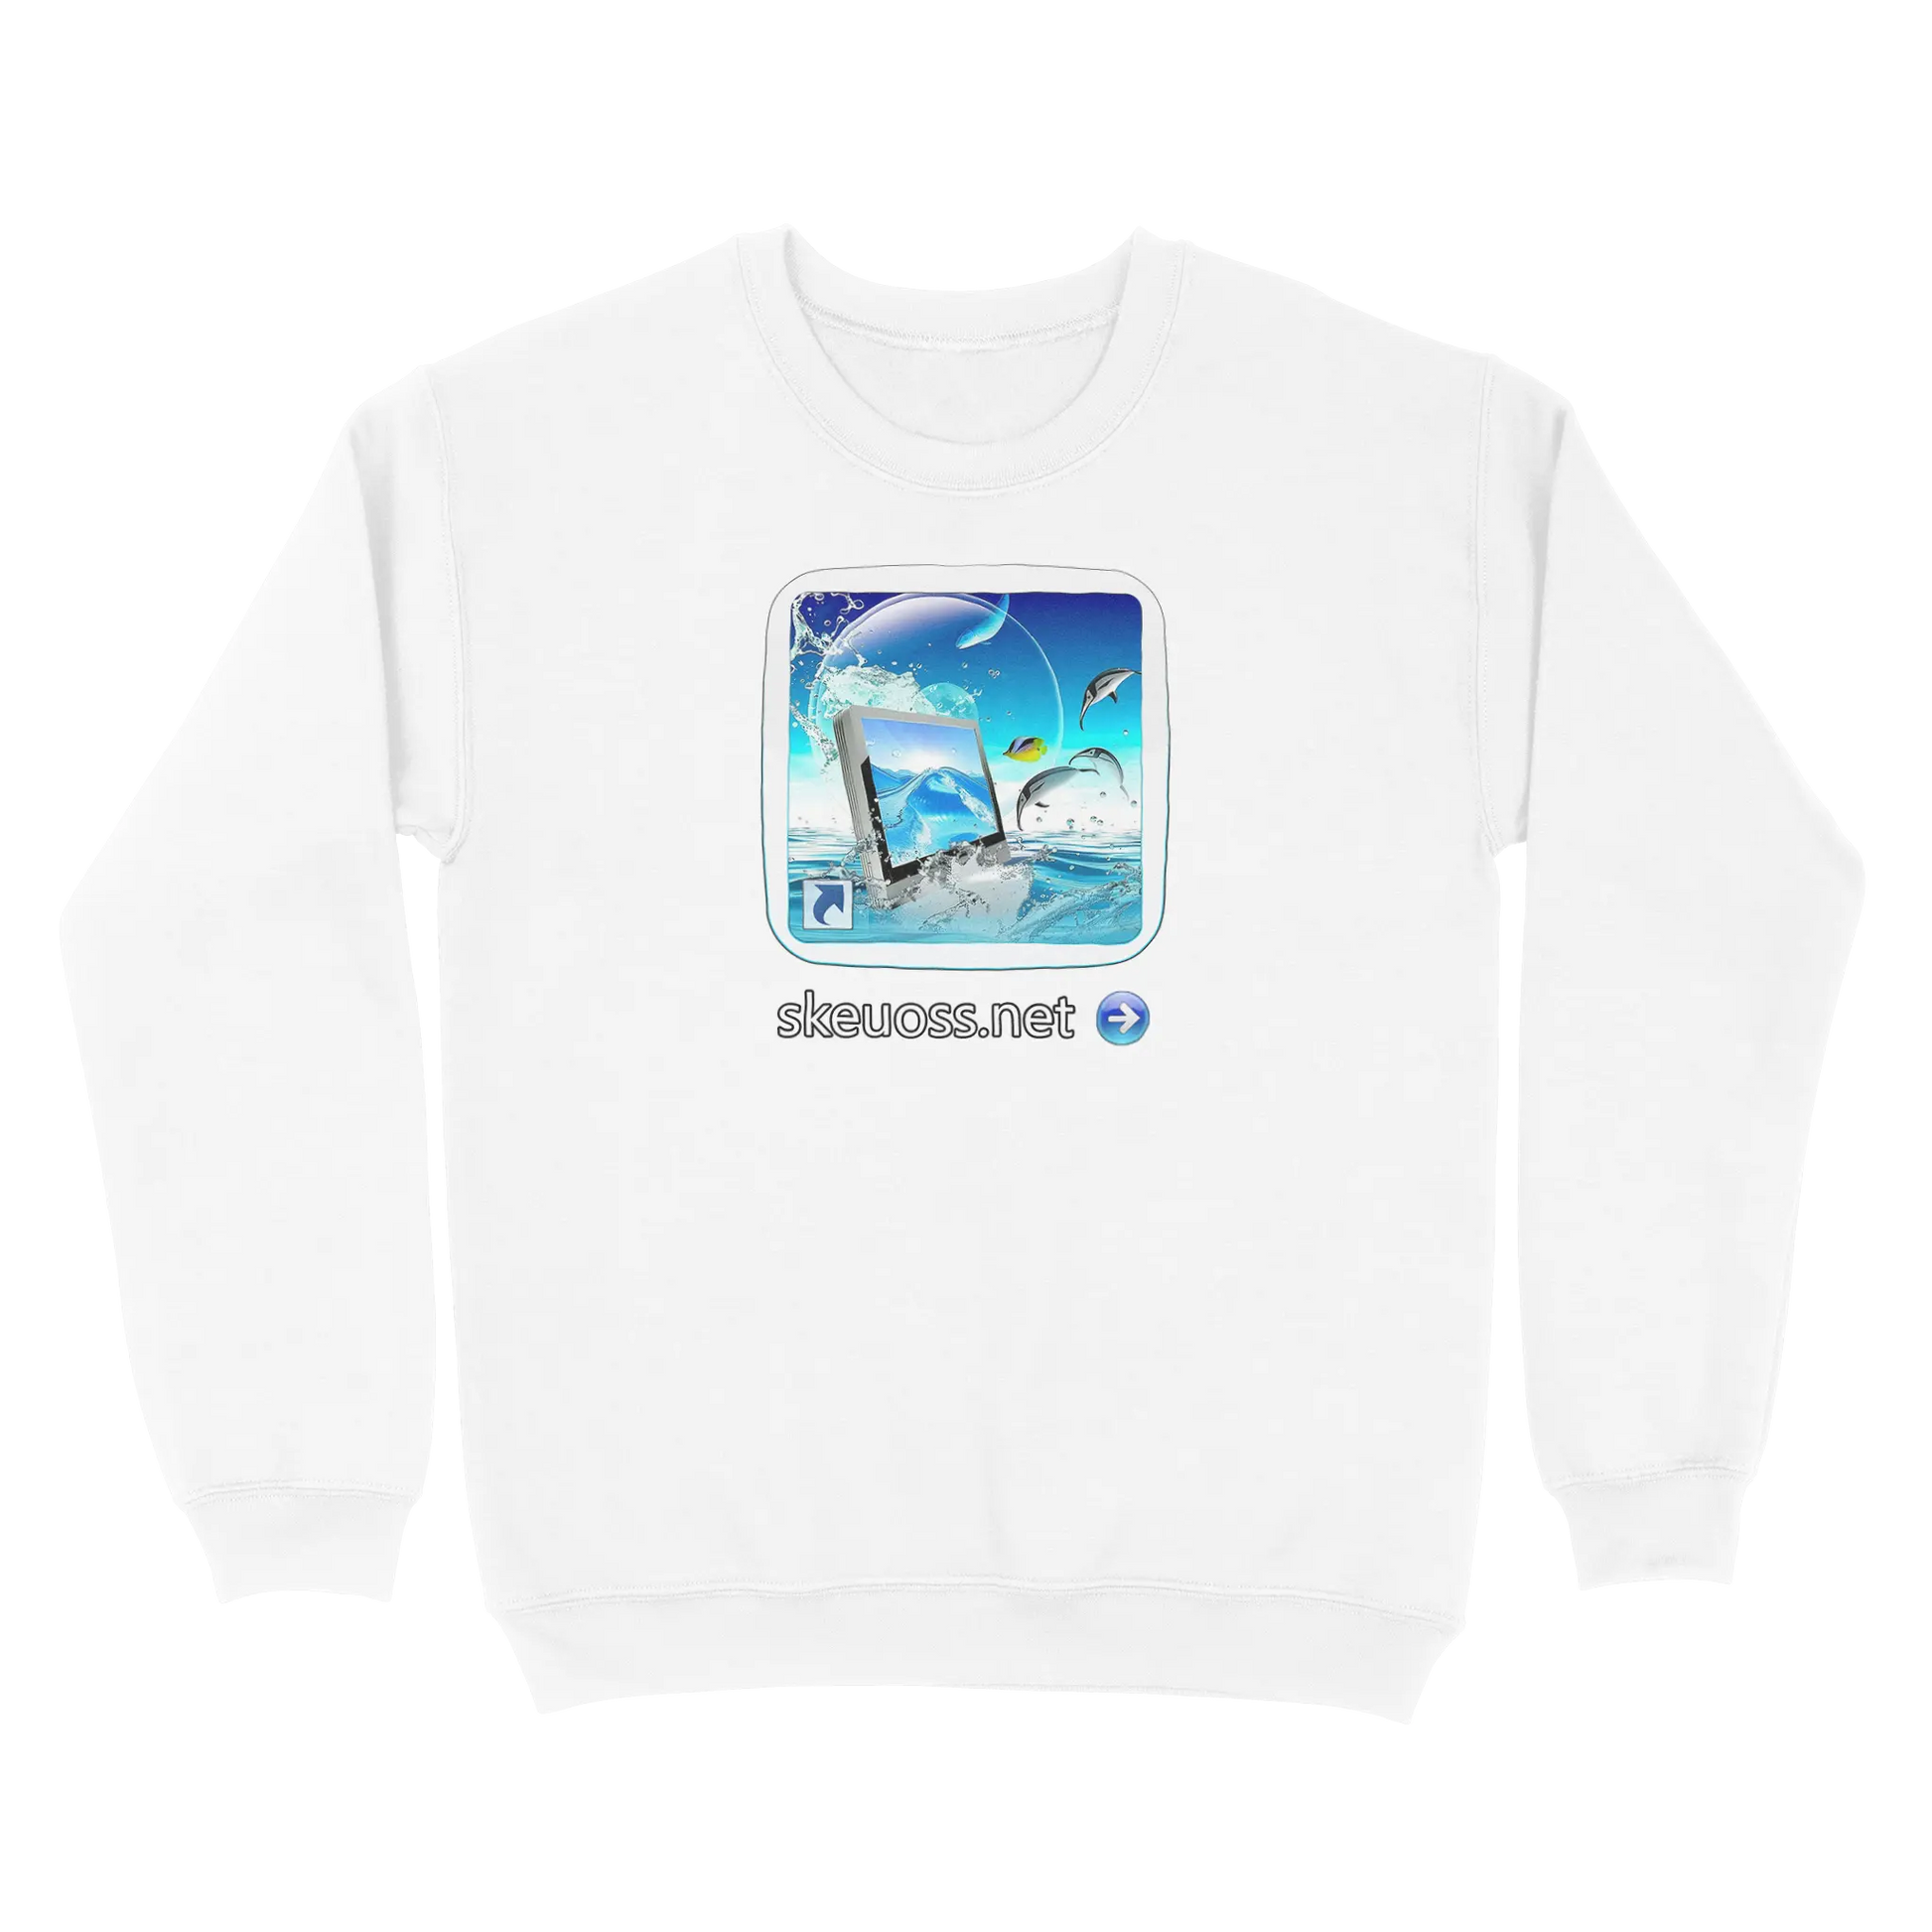 Frutiger Aero Sweatshirt - User Login Collection - User 429